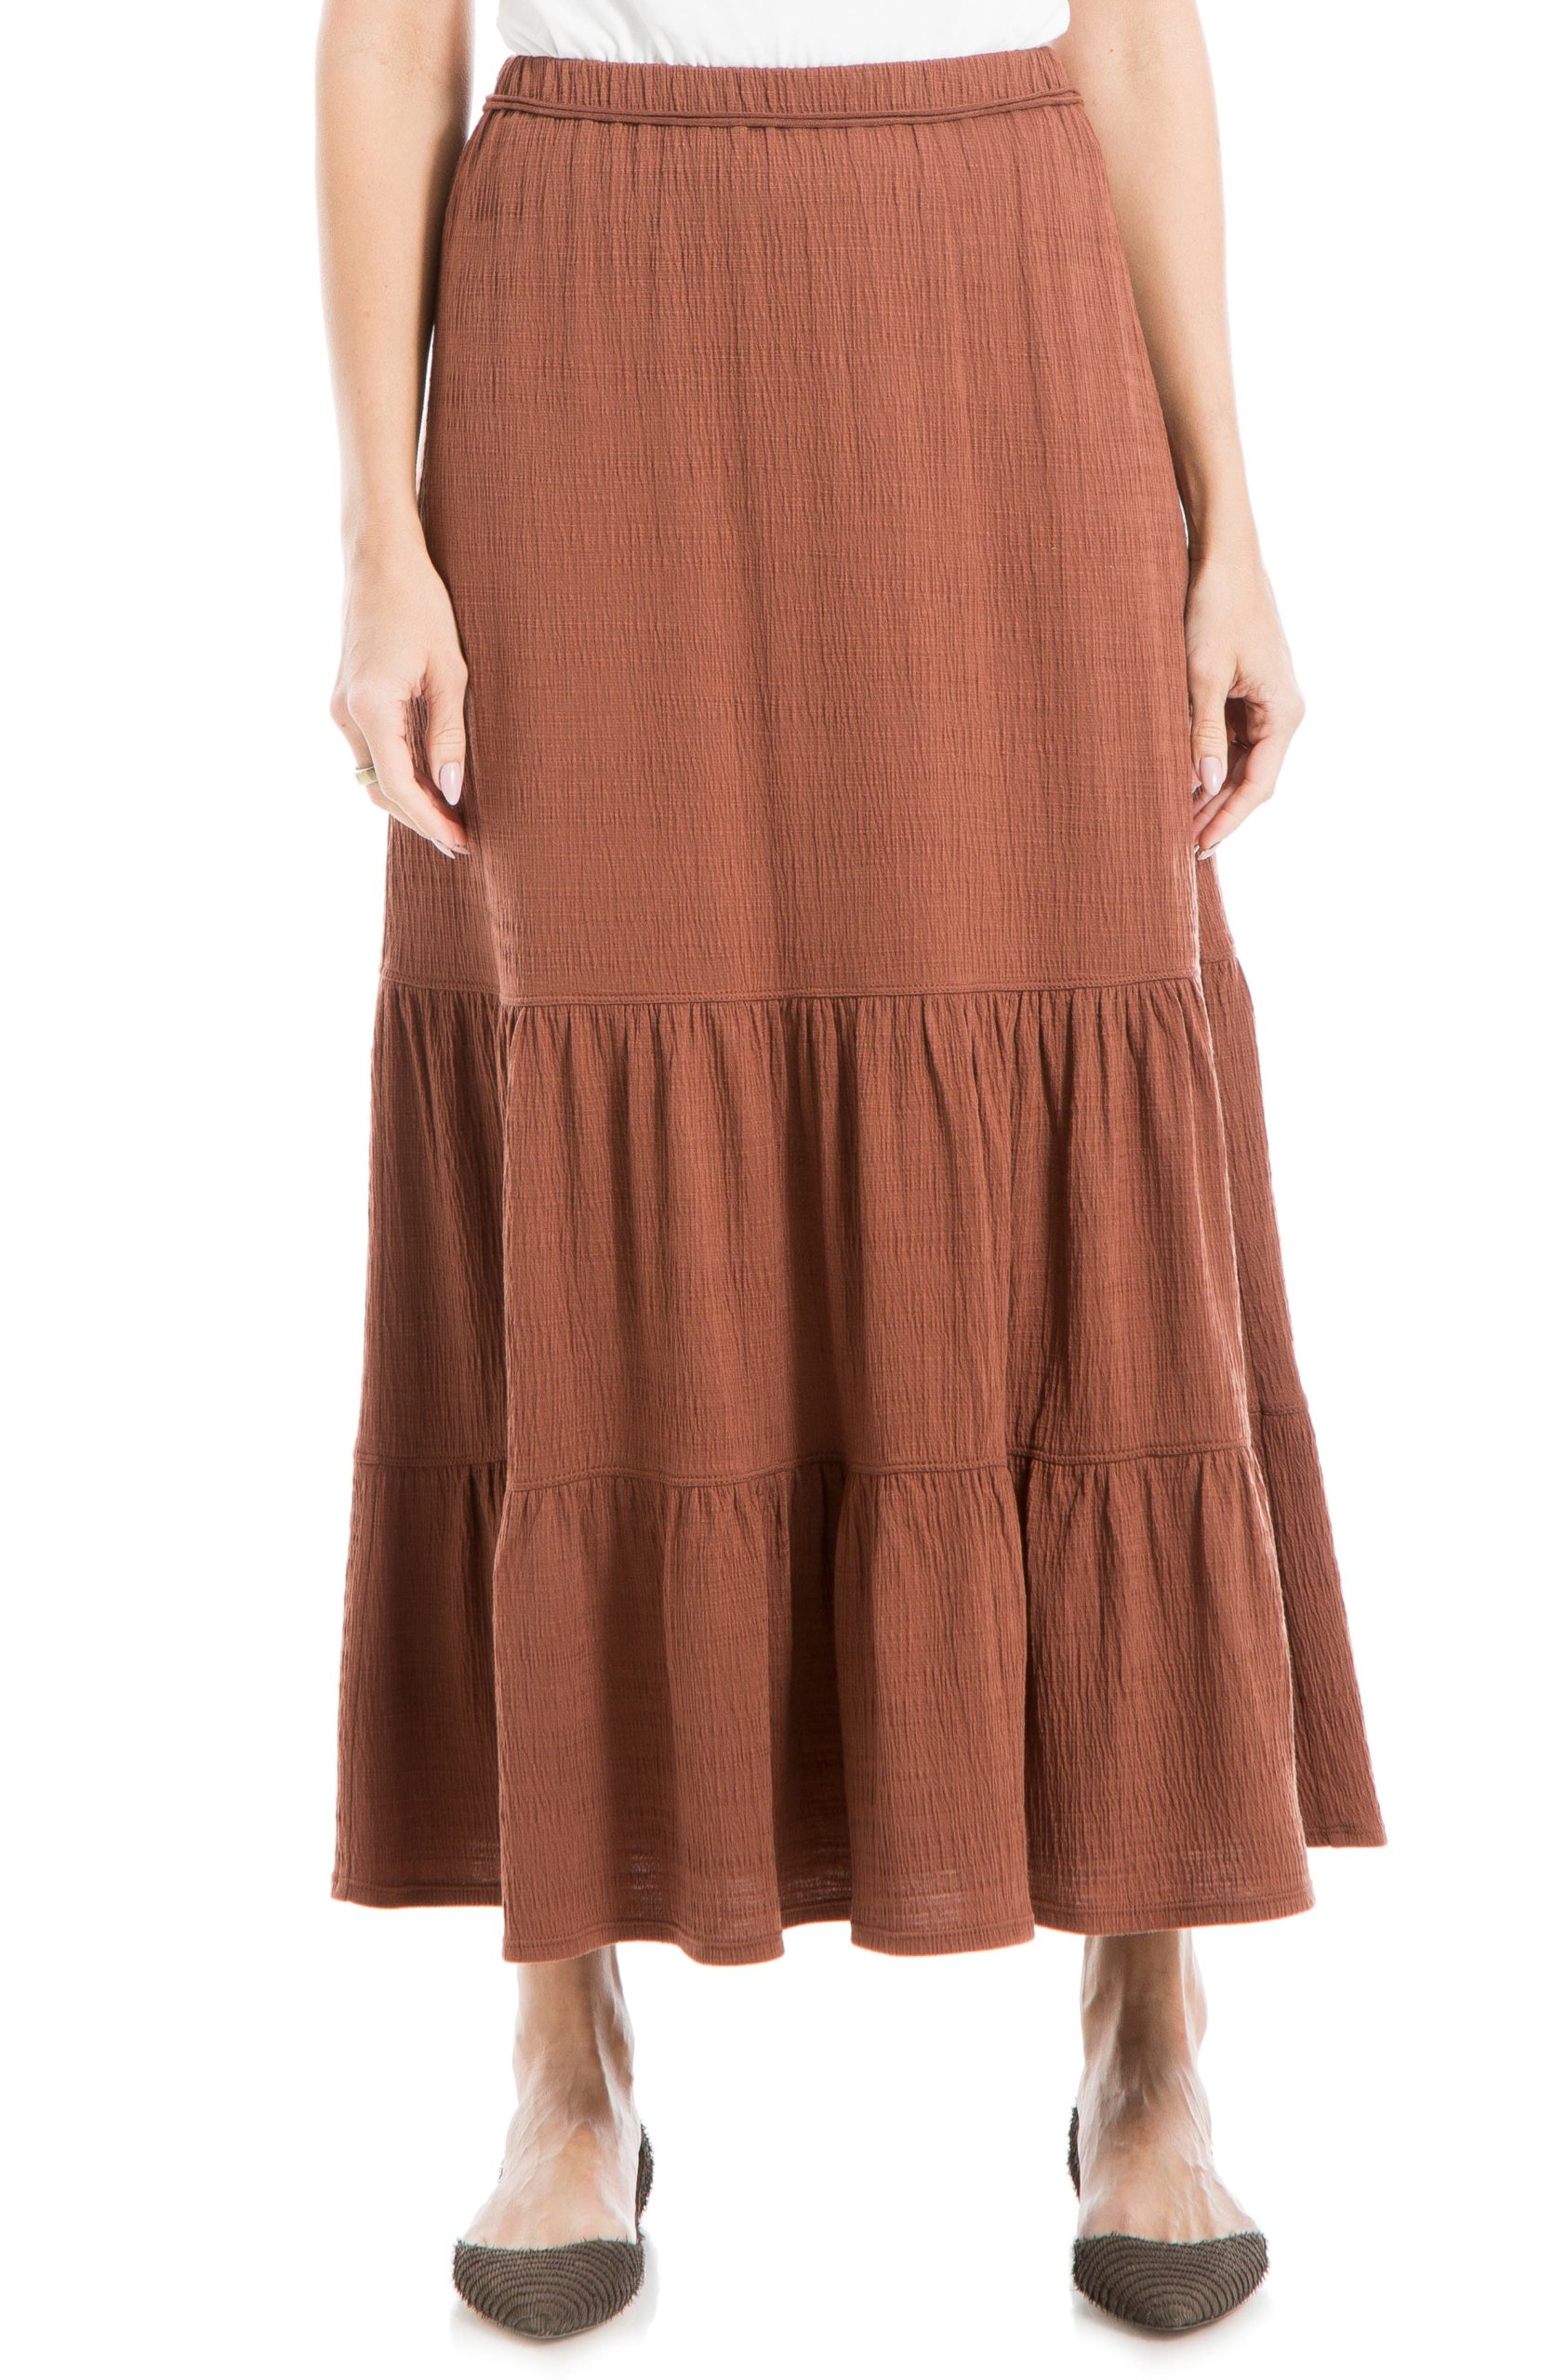 Brown skirts: Exploring Earthy Elegance in Women’s Fashion插图4